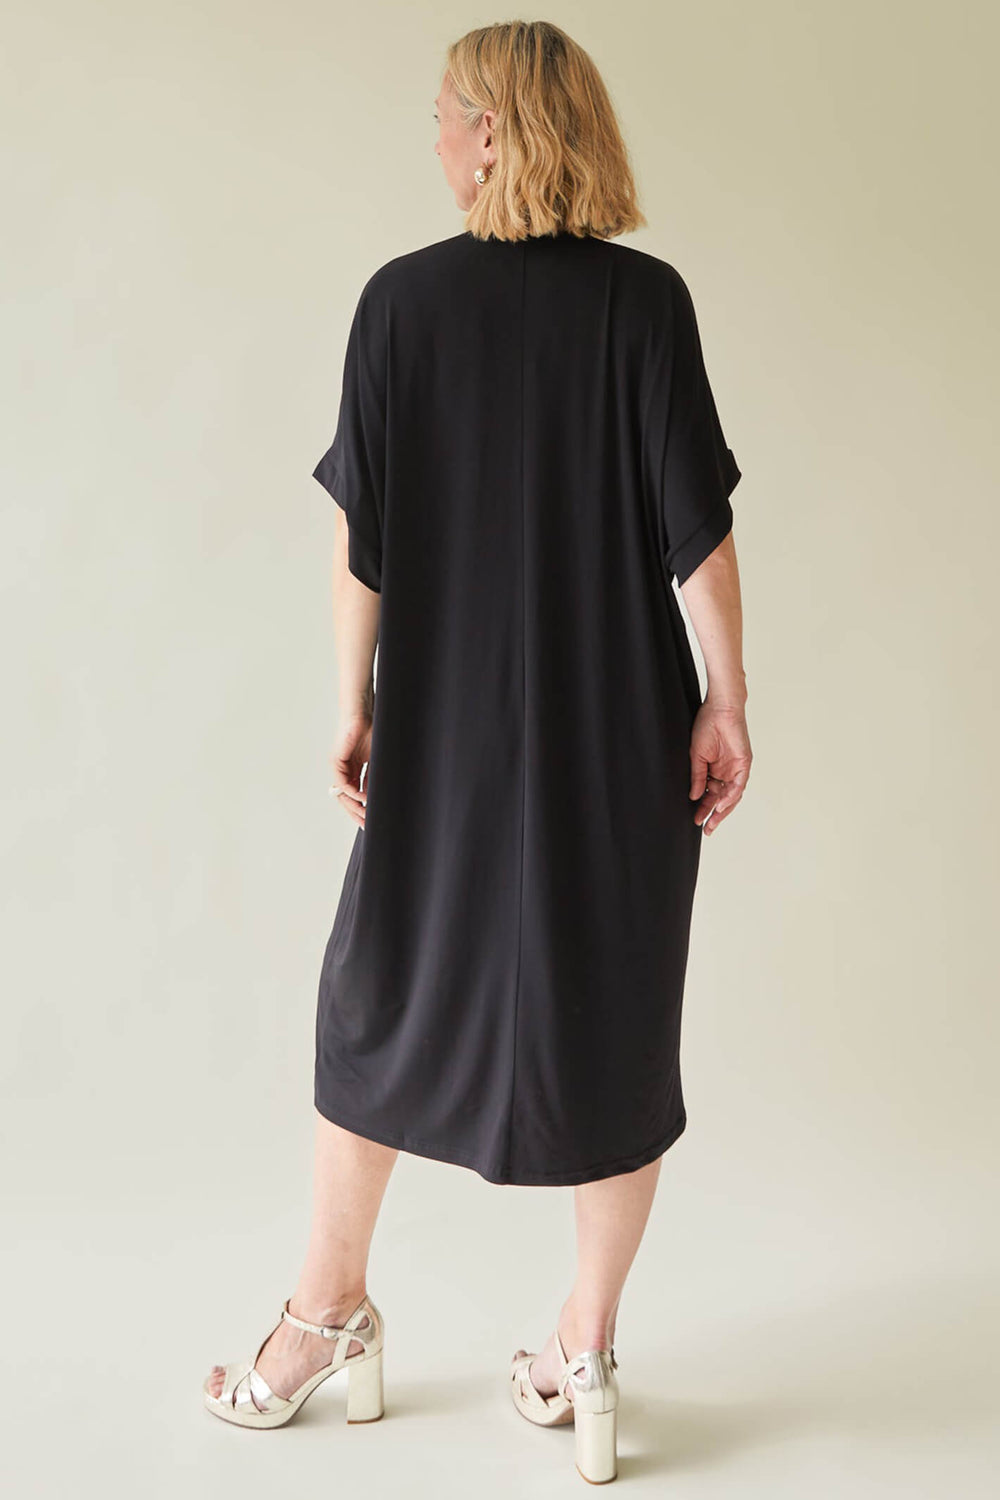 Chalk 7109-2004 Black Frankie V-Neck Short Sleeve Dress - Dotique